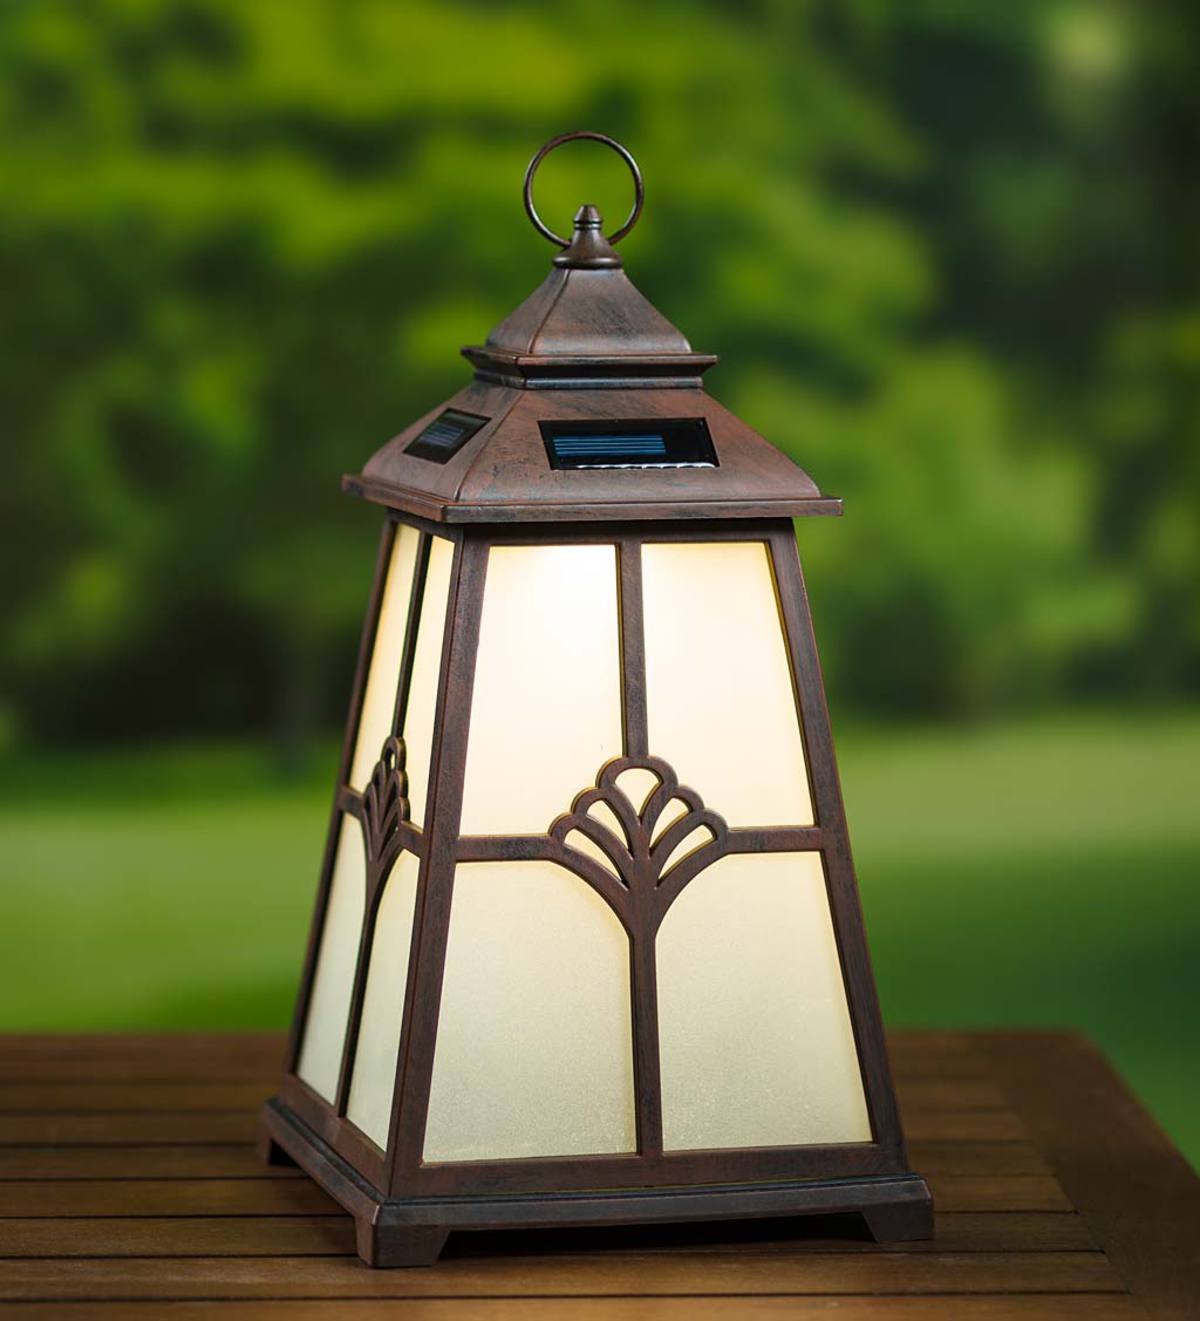 Solar Lotus Lantern Outdoor LED Light